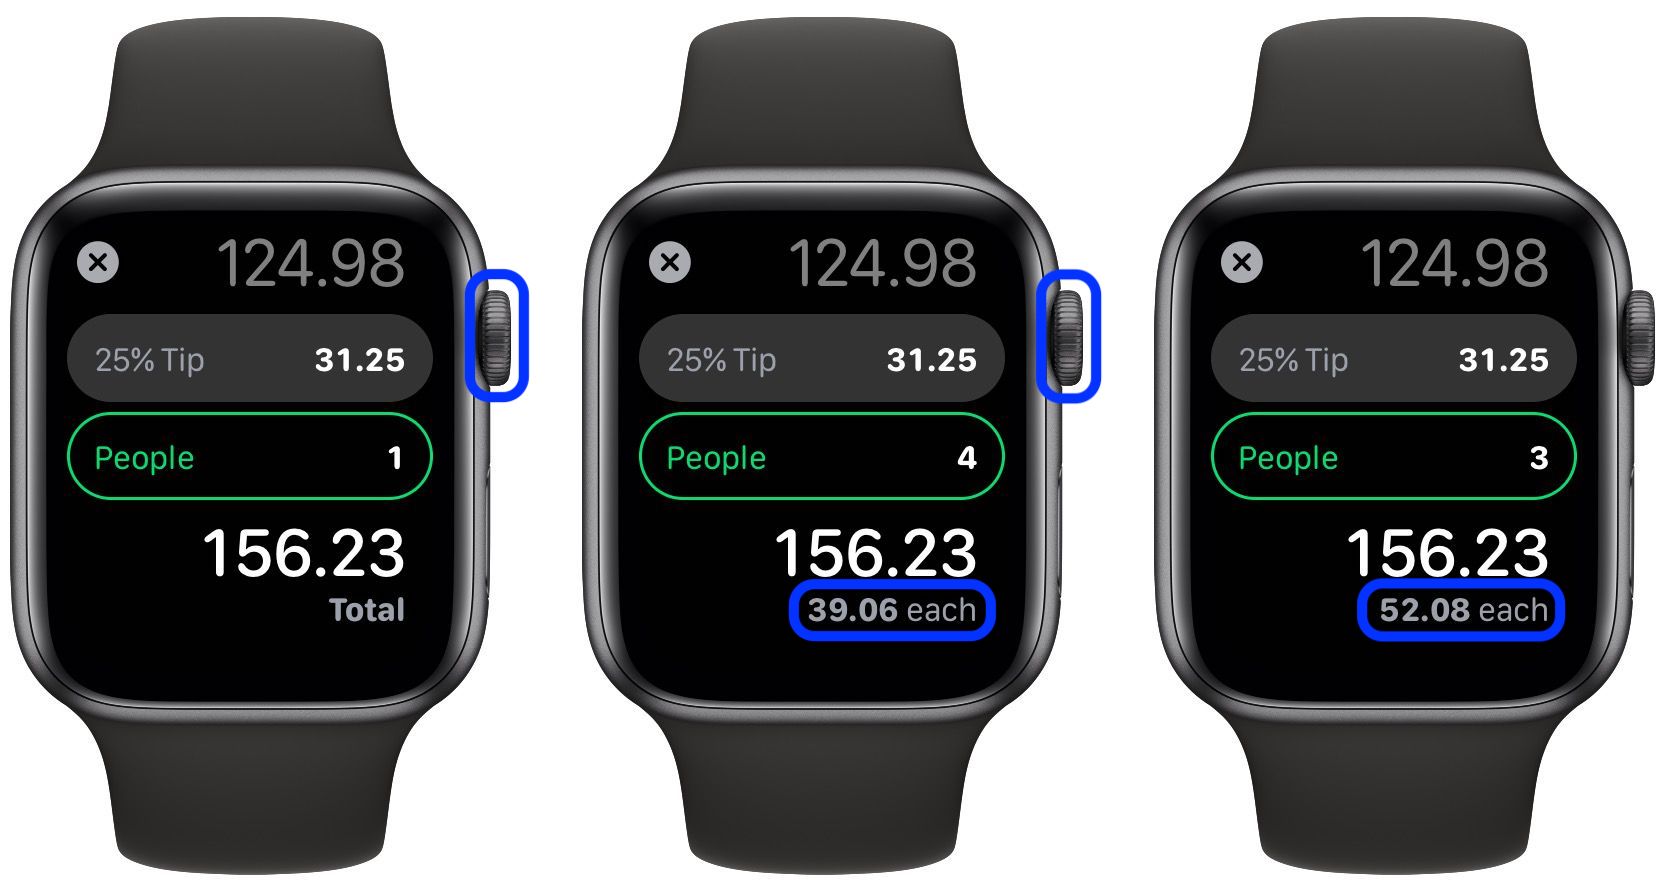 How to use split bill tip calculator Apple Watch walkthrough 2